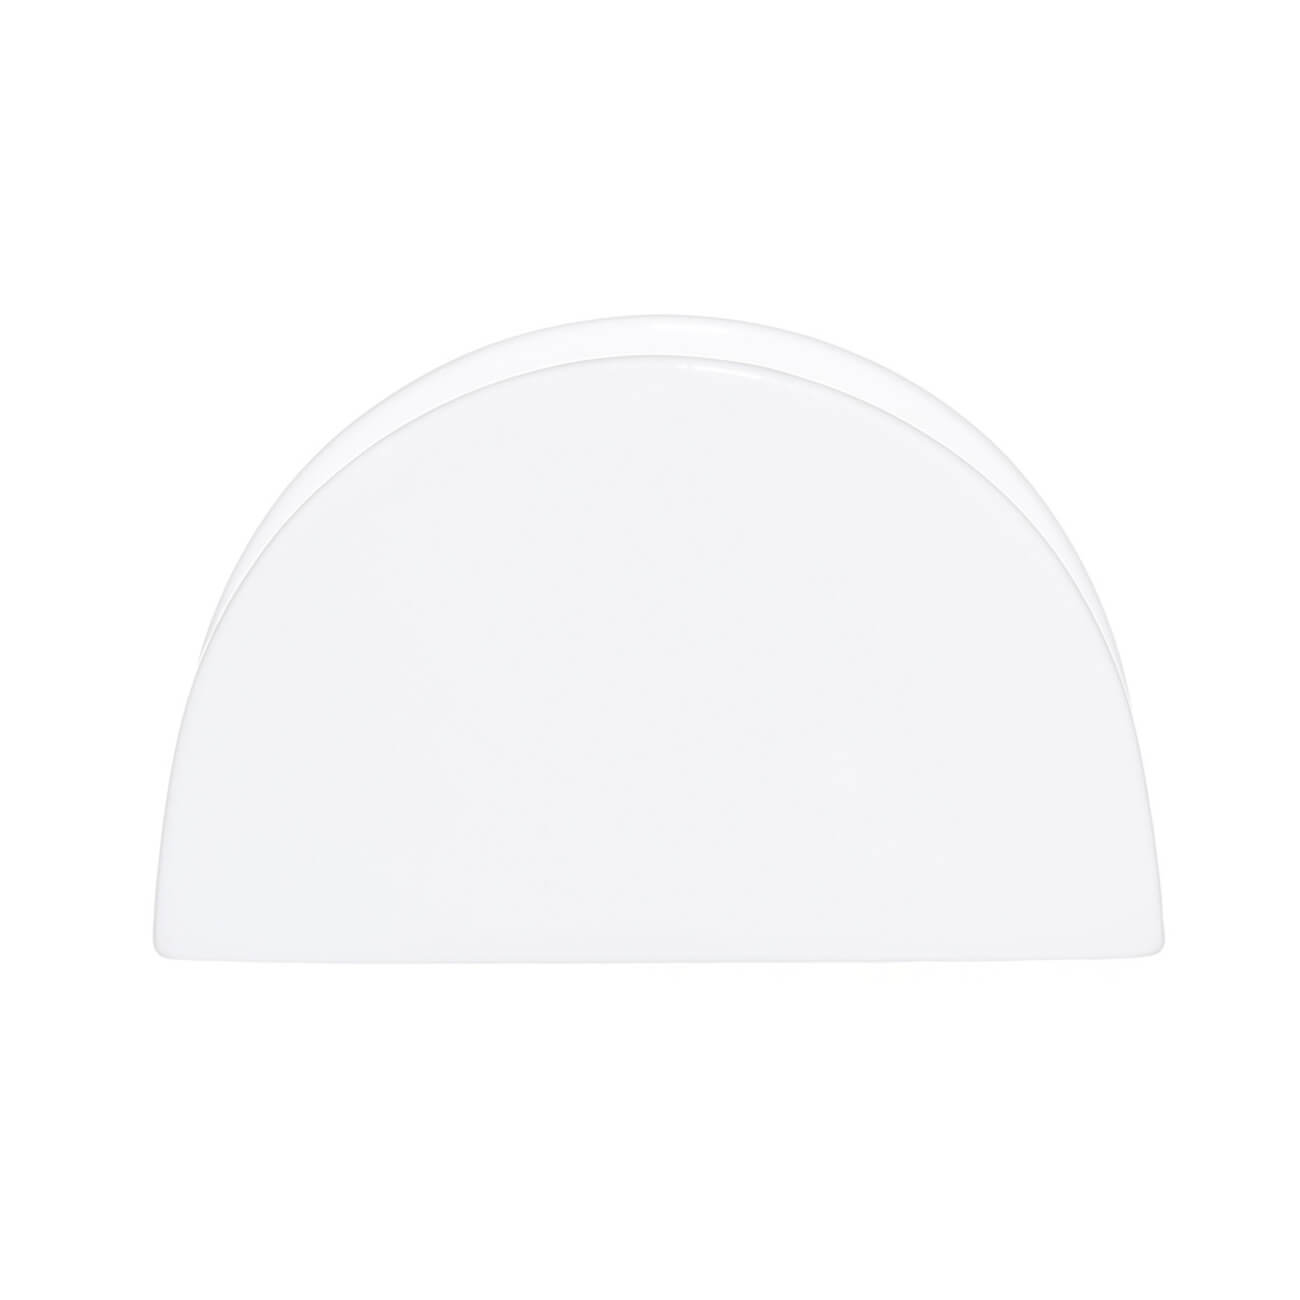 Салфетница, 11 см, фарфор F, белая, Ideal white изображение № 1